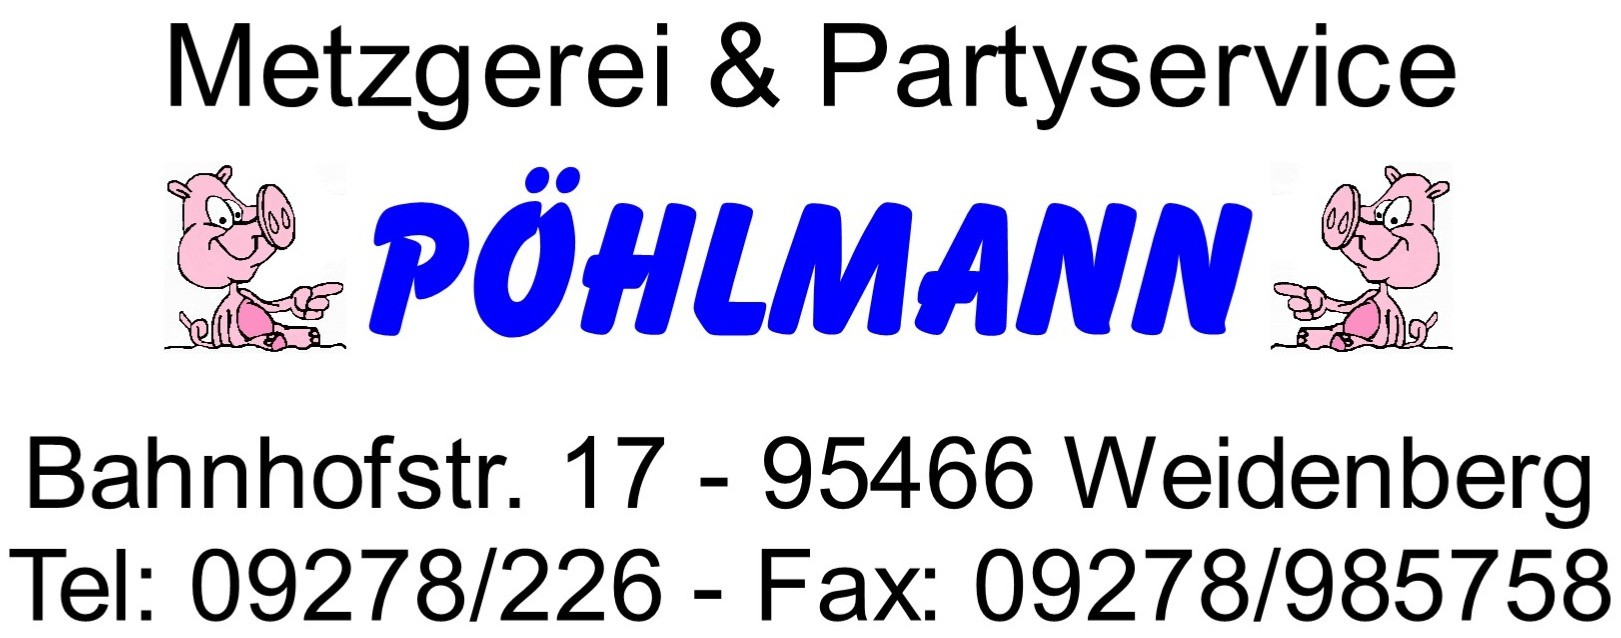 poehlmann.logo.jpg